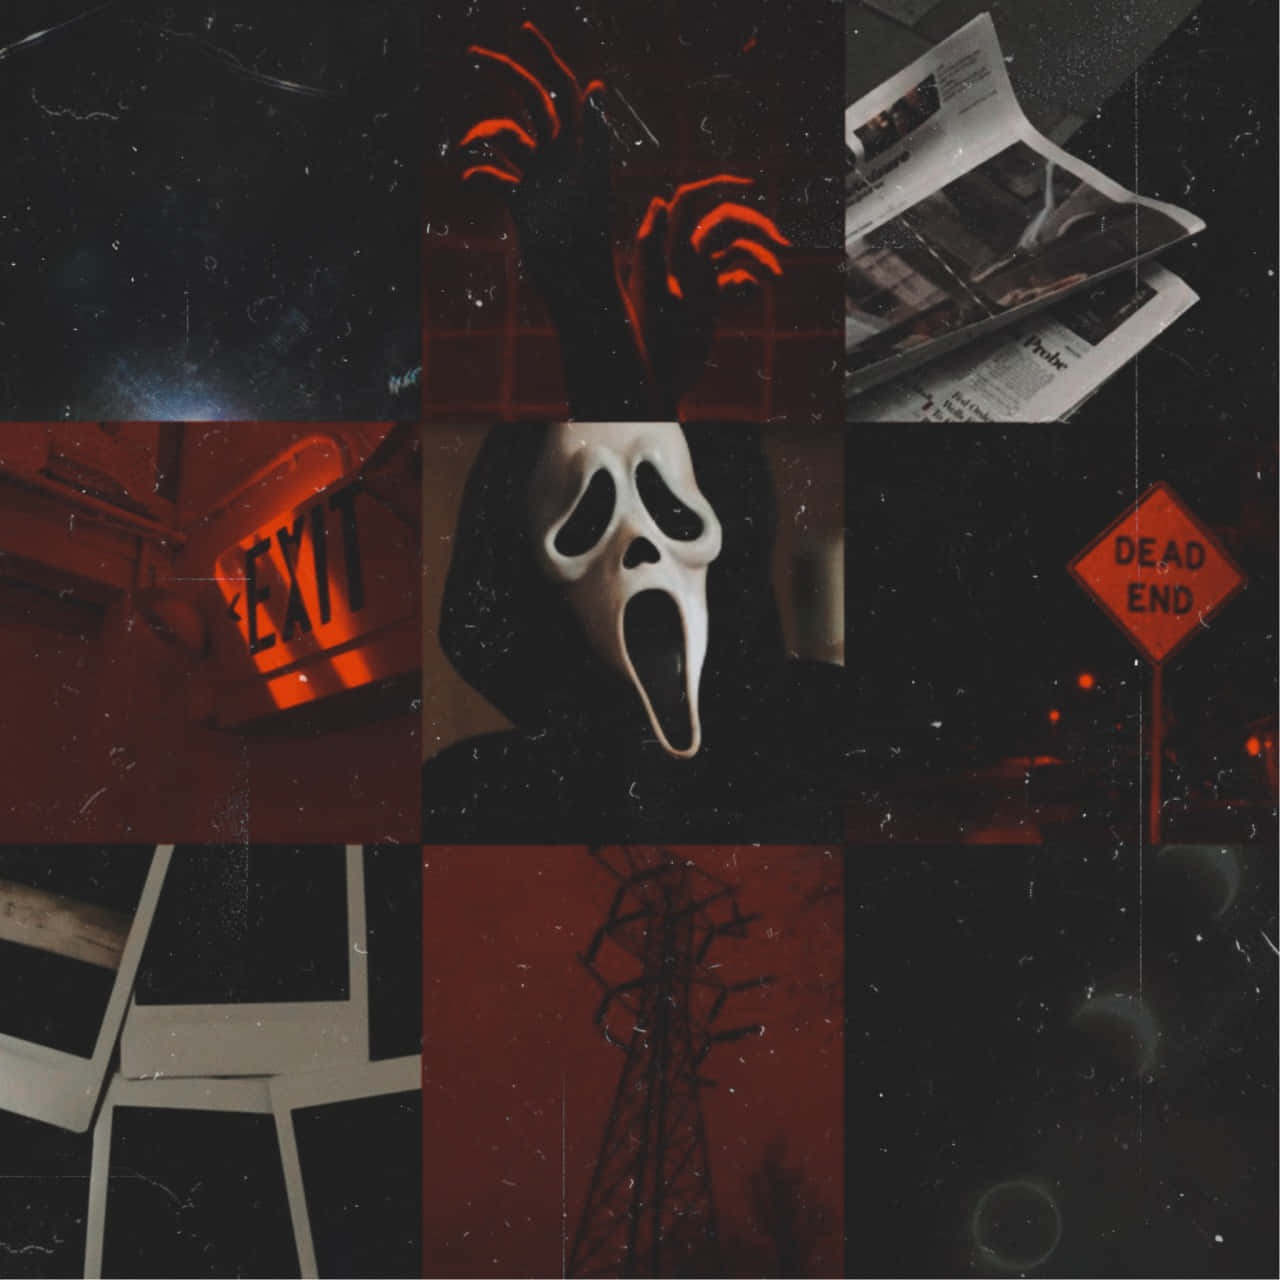 Aesthetic wallpaper for phone of the movie Scream - Ghostface, horror